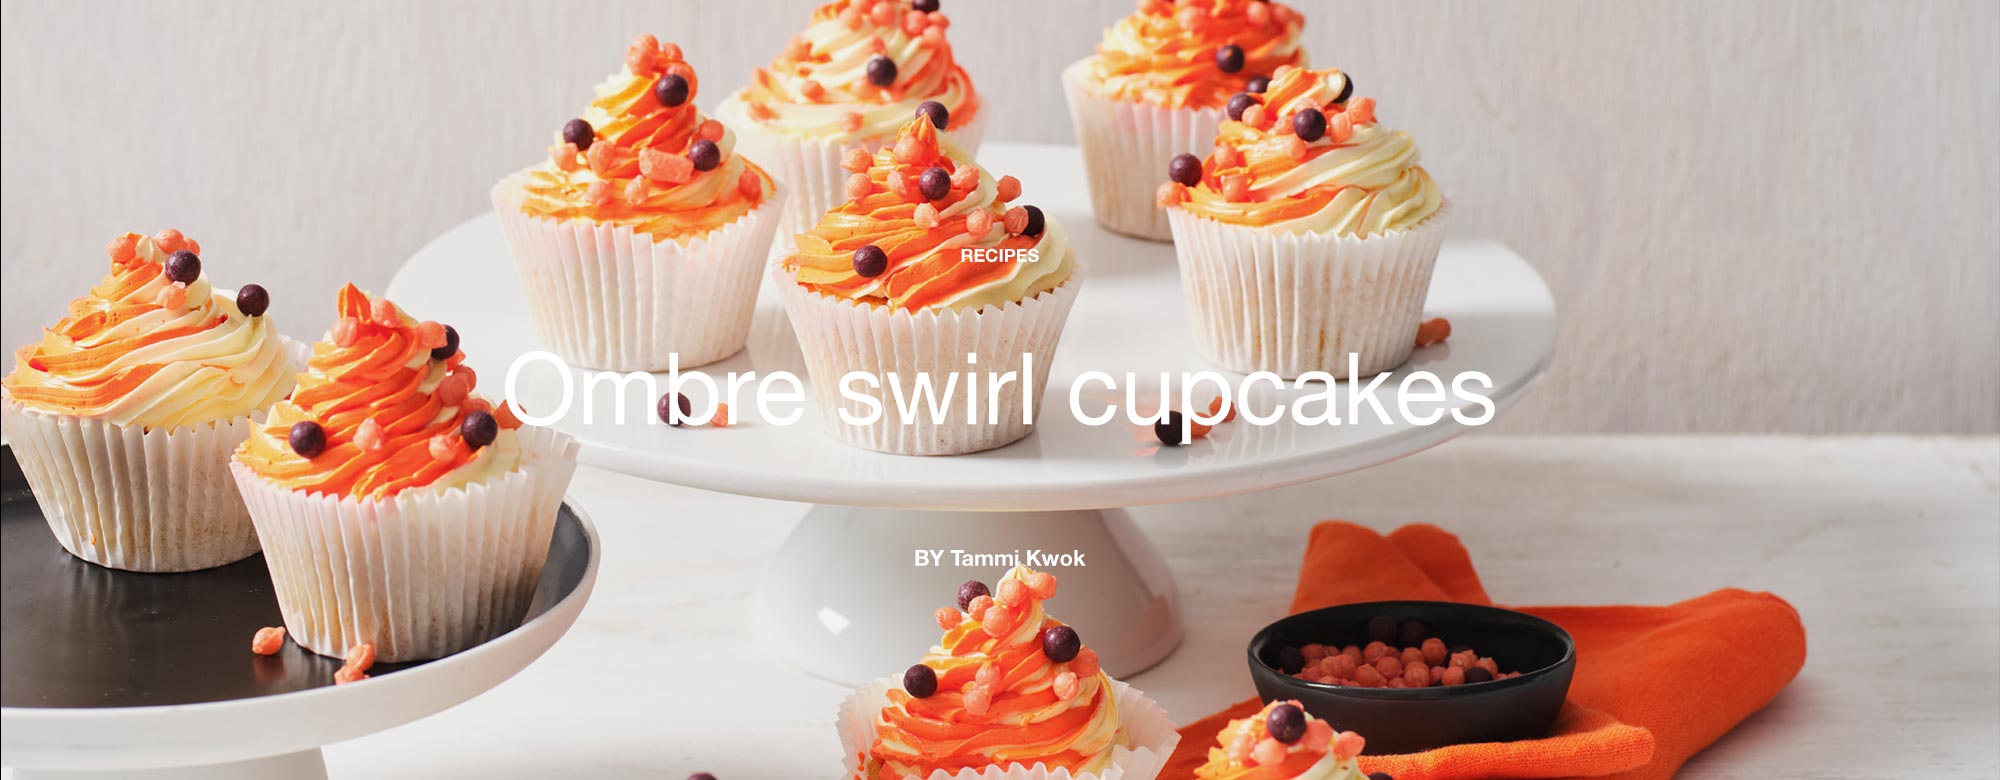 Ombre swirl cupcakes